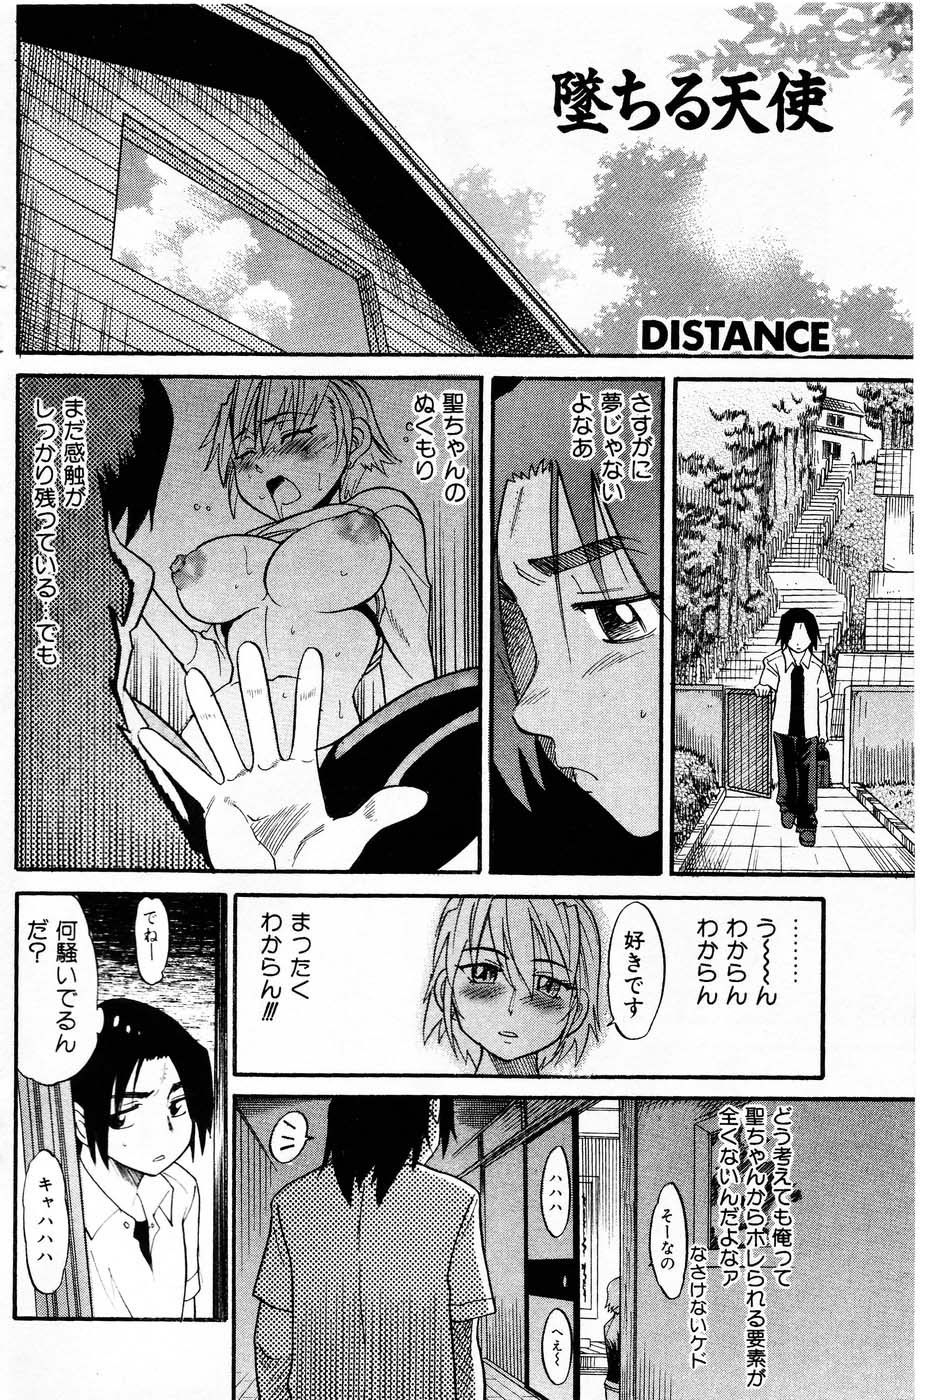 Distance - Ochiru Tenshi Vol. 3 (INCOMPLETE) - Photo #26